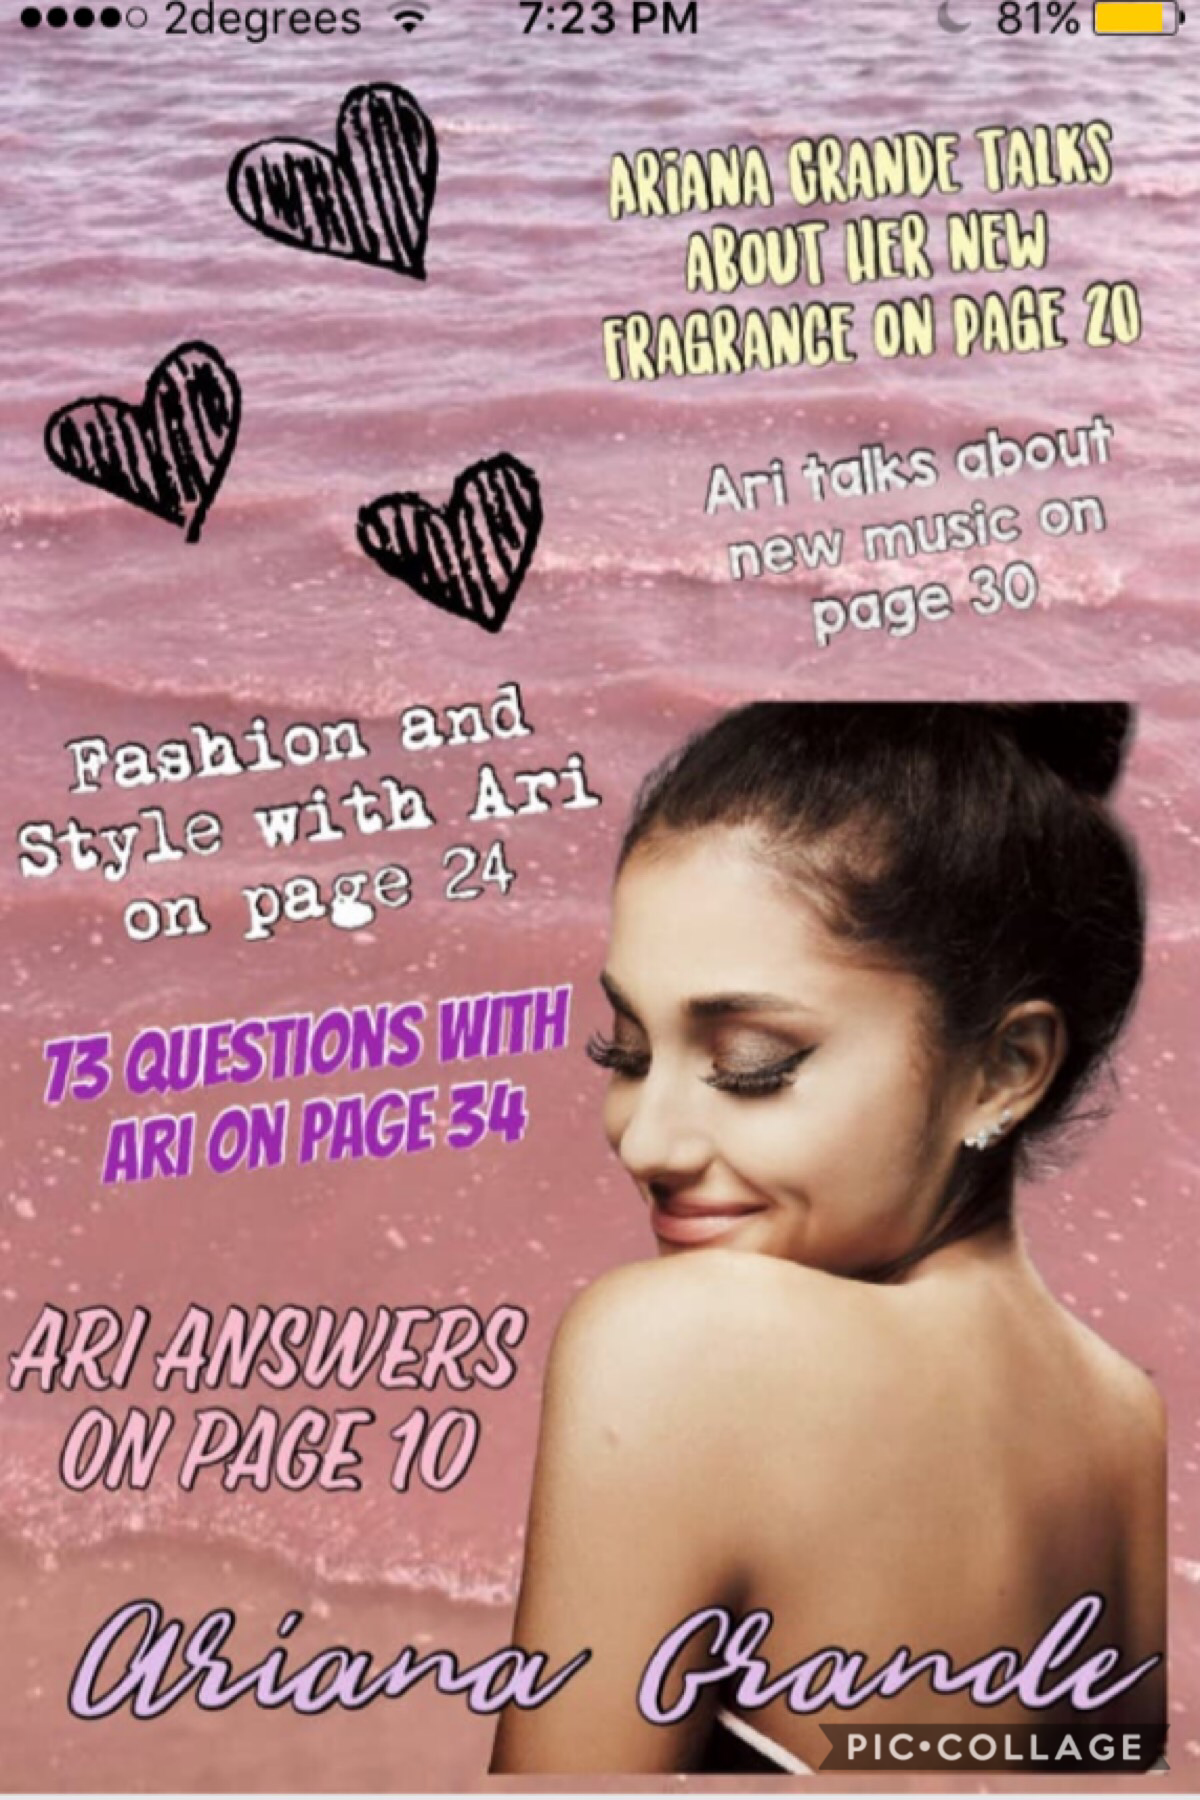 Ariana Grande collage for descendants queens celebrity games round 2